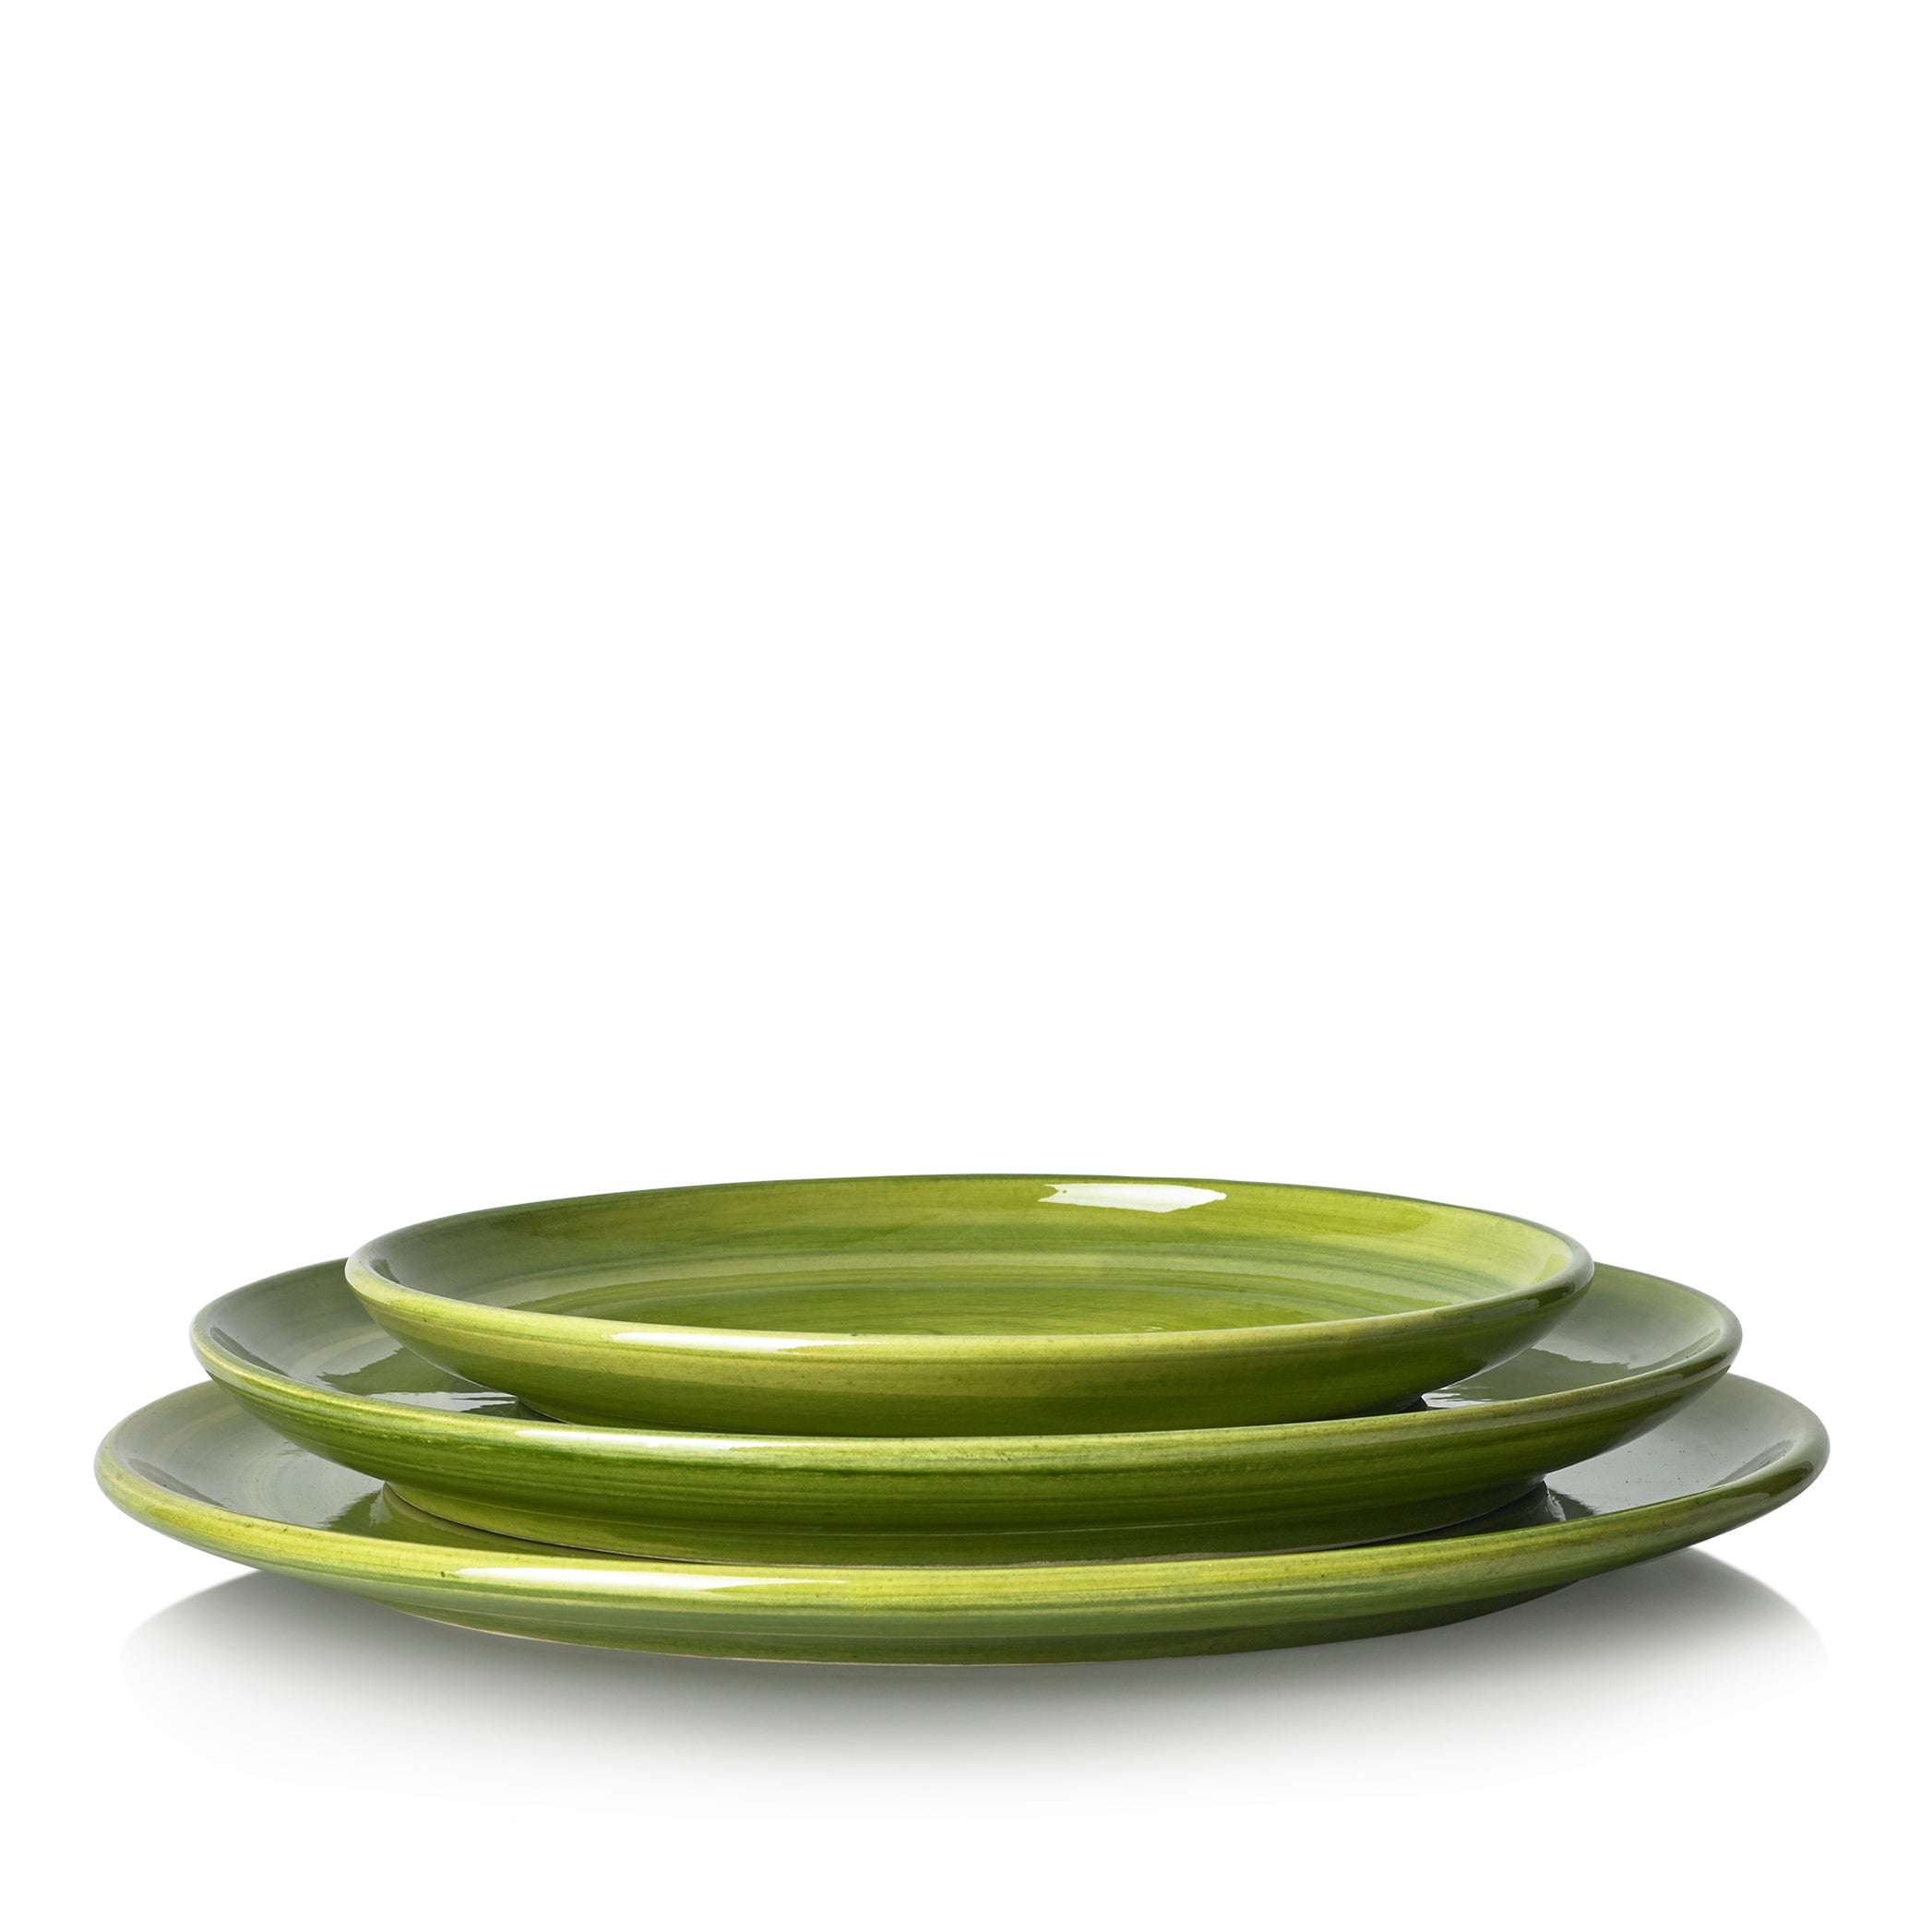 S&B "La Couronne" 26cm Ceramic Dinner Plate in Green